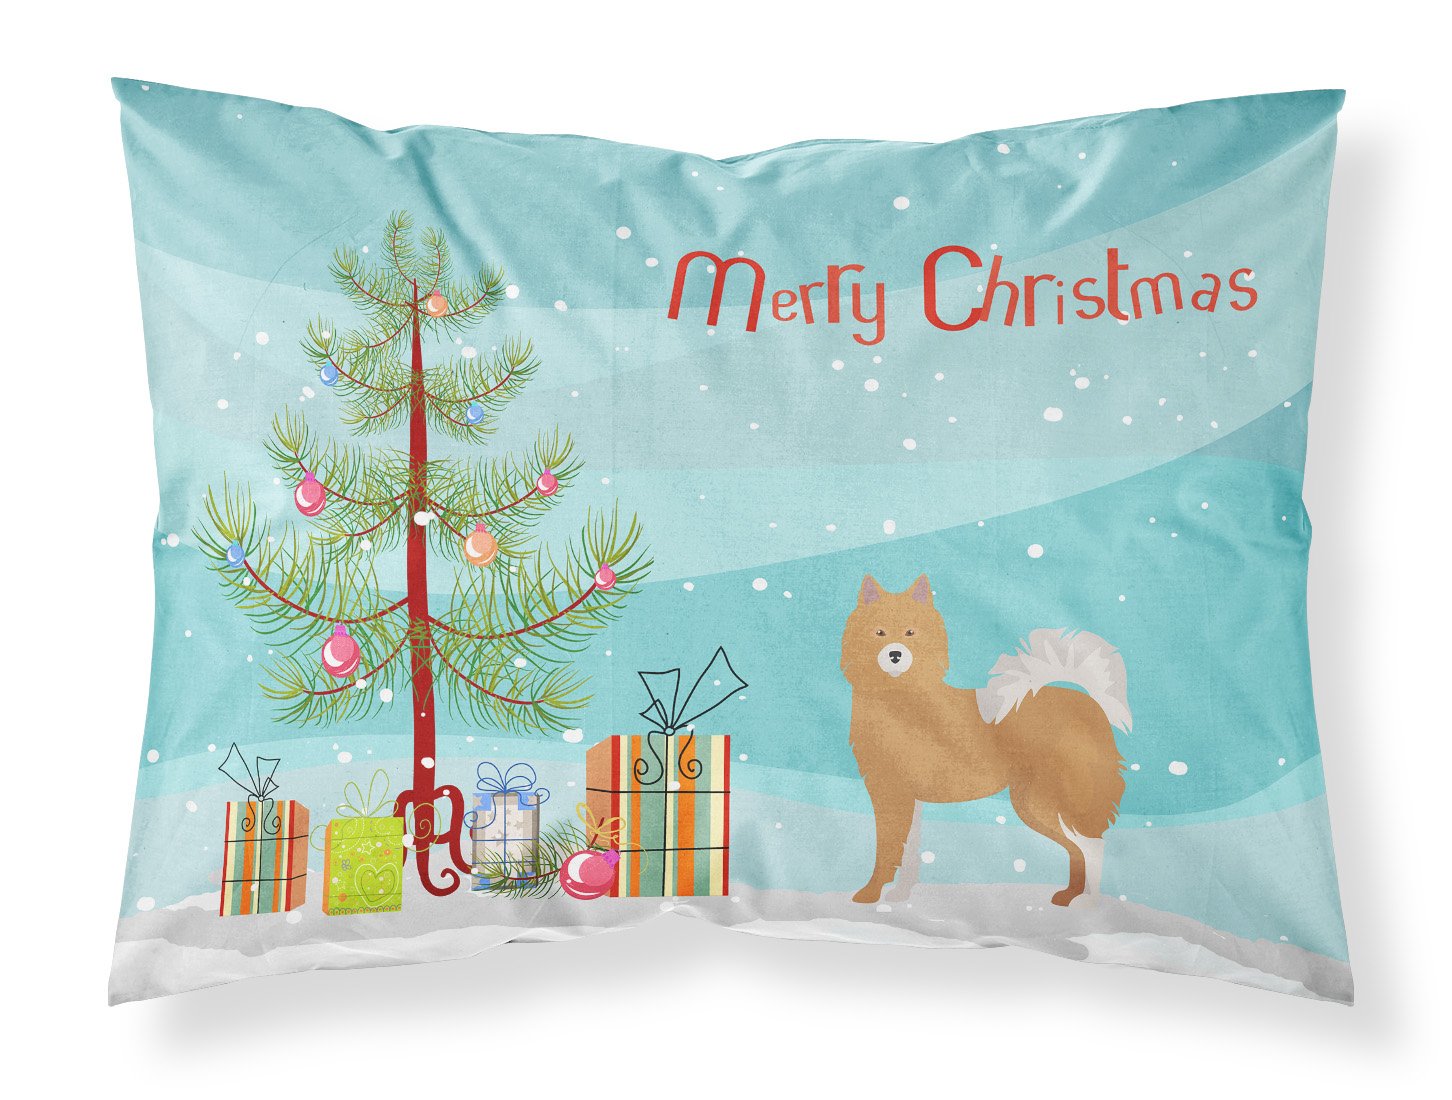 Brown & White Elo dog Christmas Tree Fabric Standard Pillowcase CK3451PILLOWCASE by Caroline's Treasures